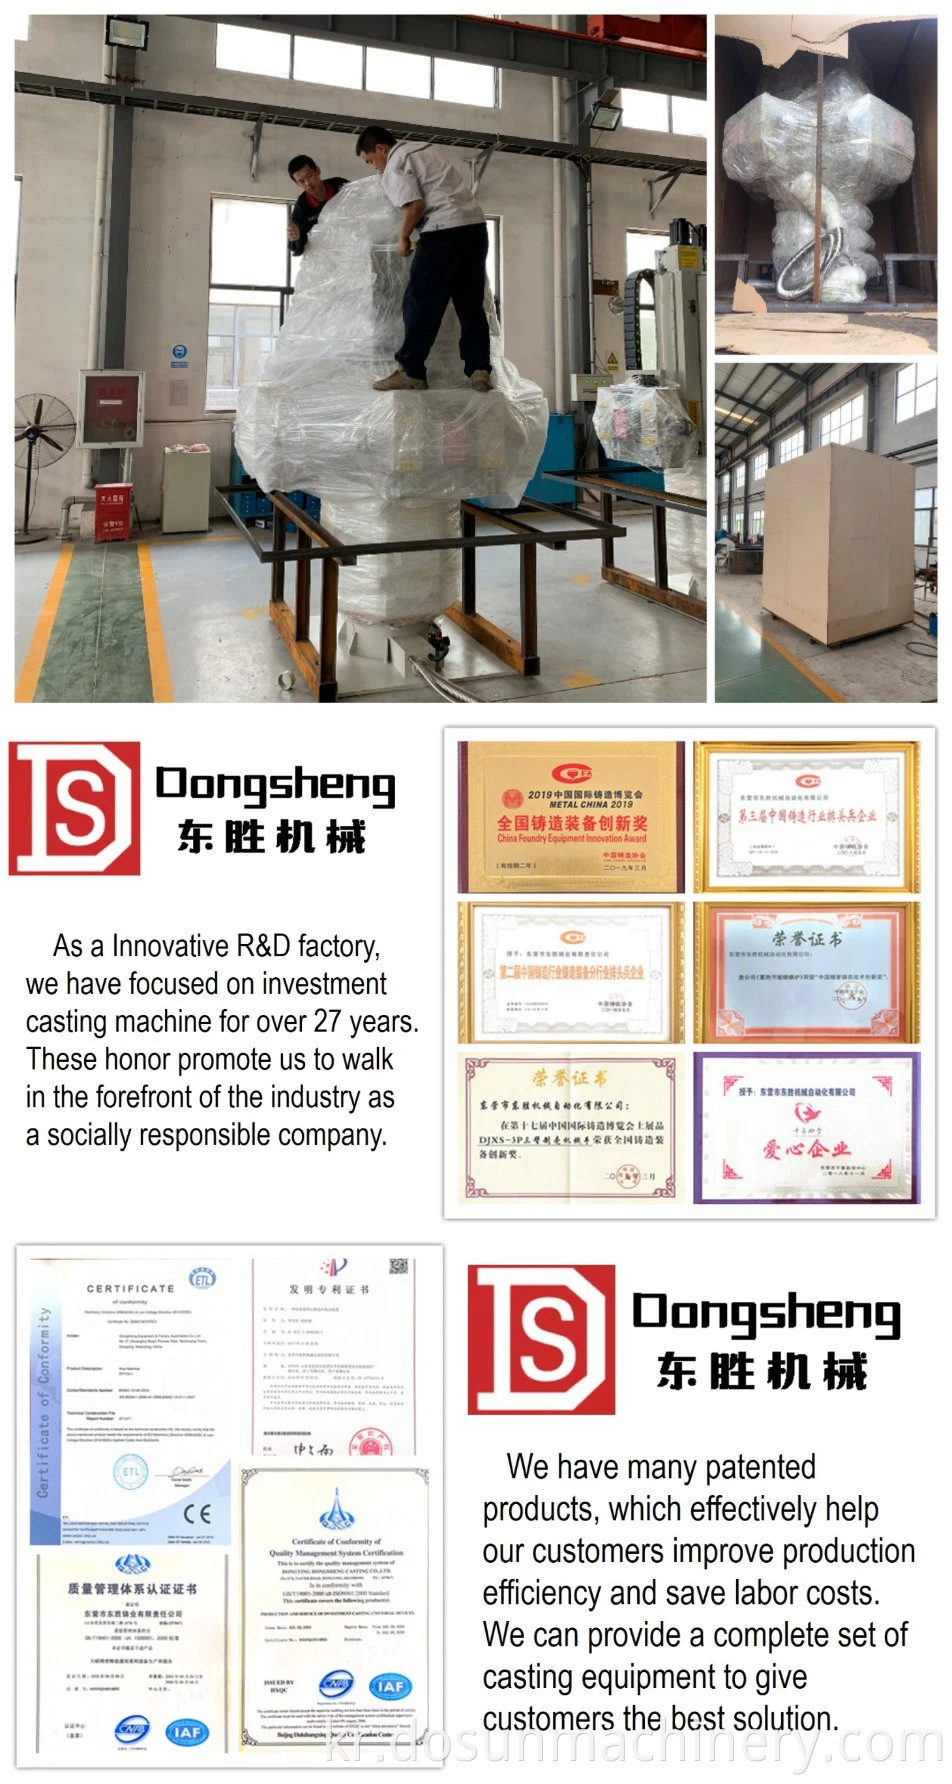 Dongsheng 캐스팅 ISO9001 투자 주조를위한 조종기를 붓는 조작자